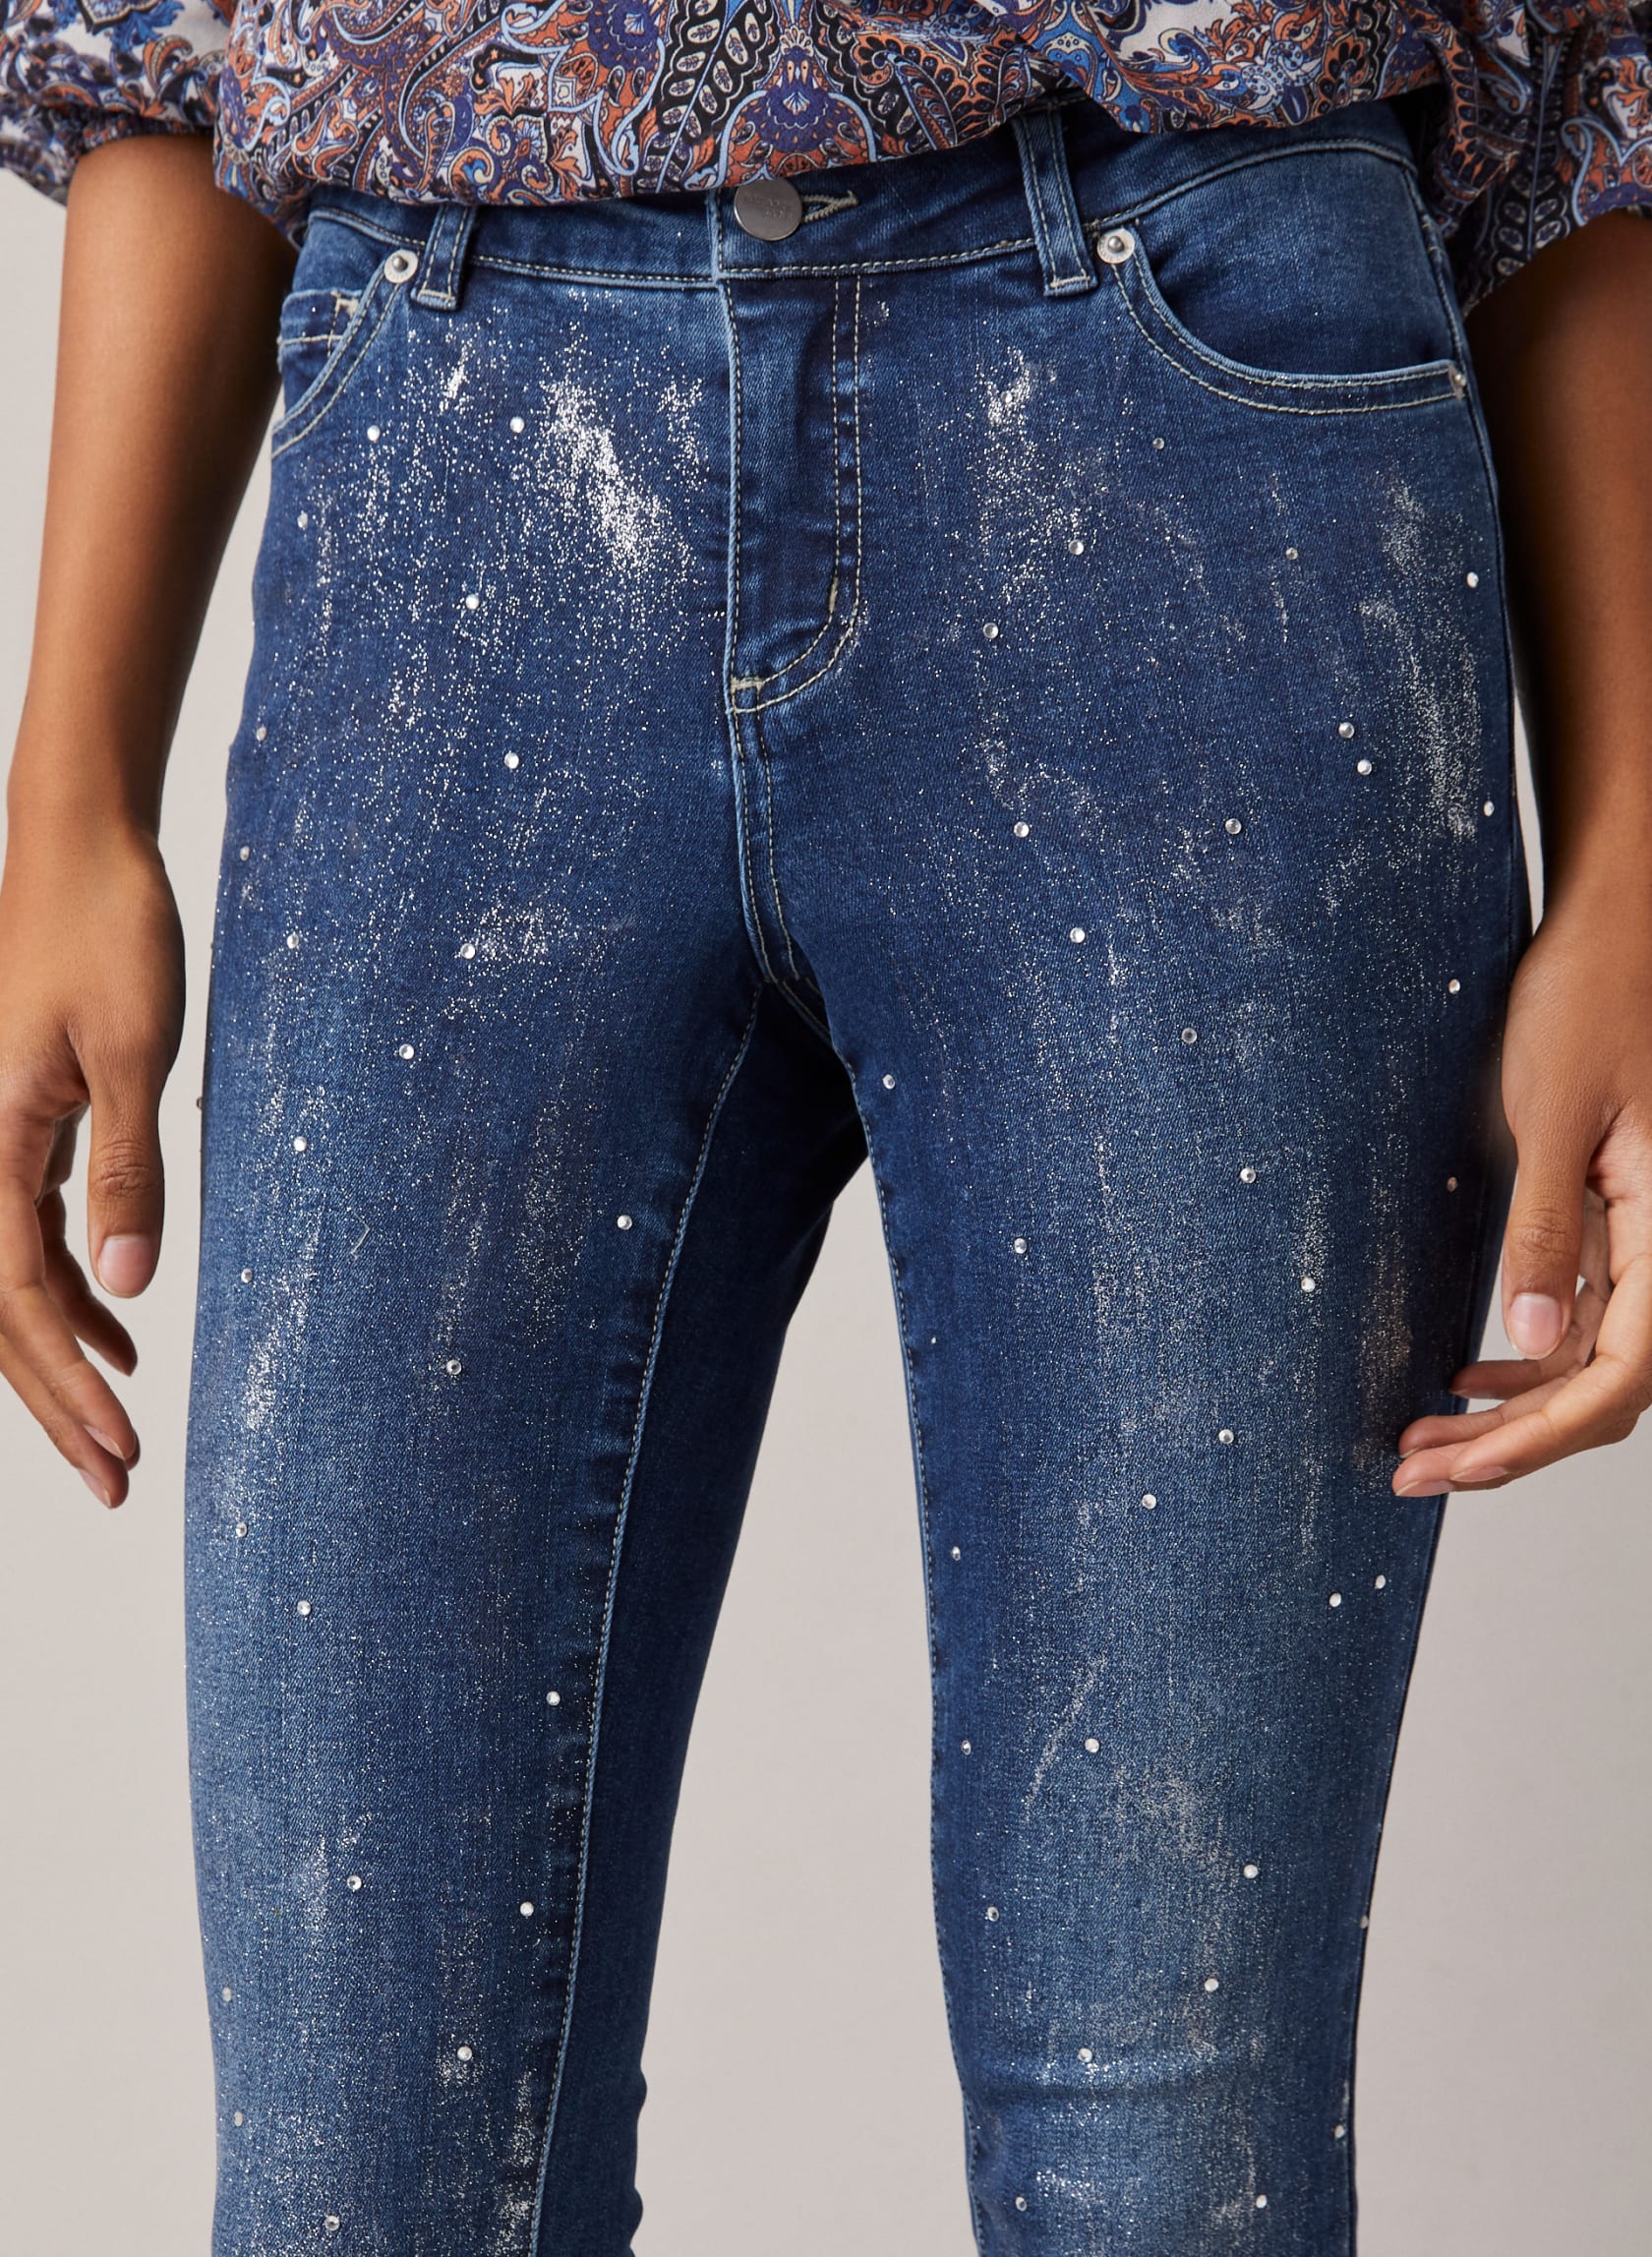 Glitter & Rhinestone Embellished Jeans | Melanie Lyne